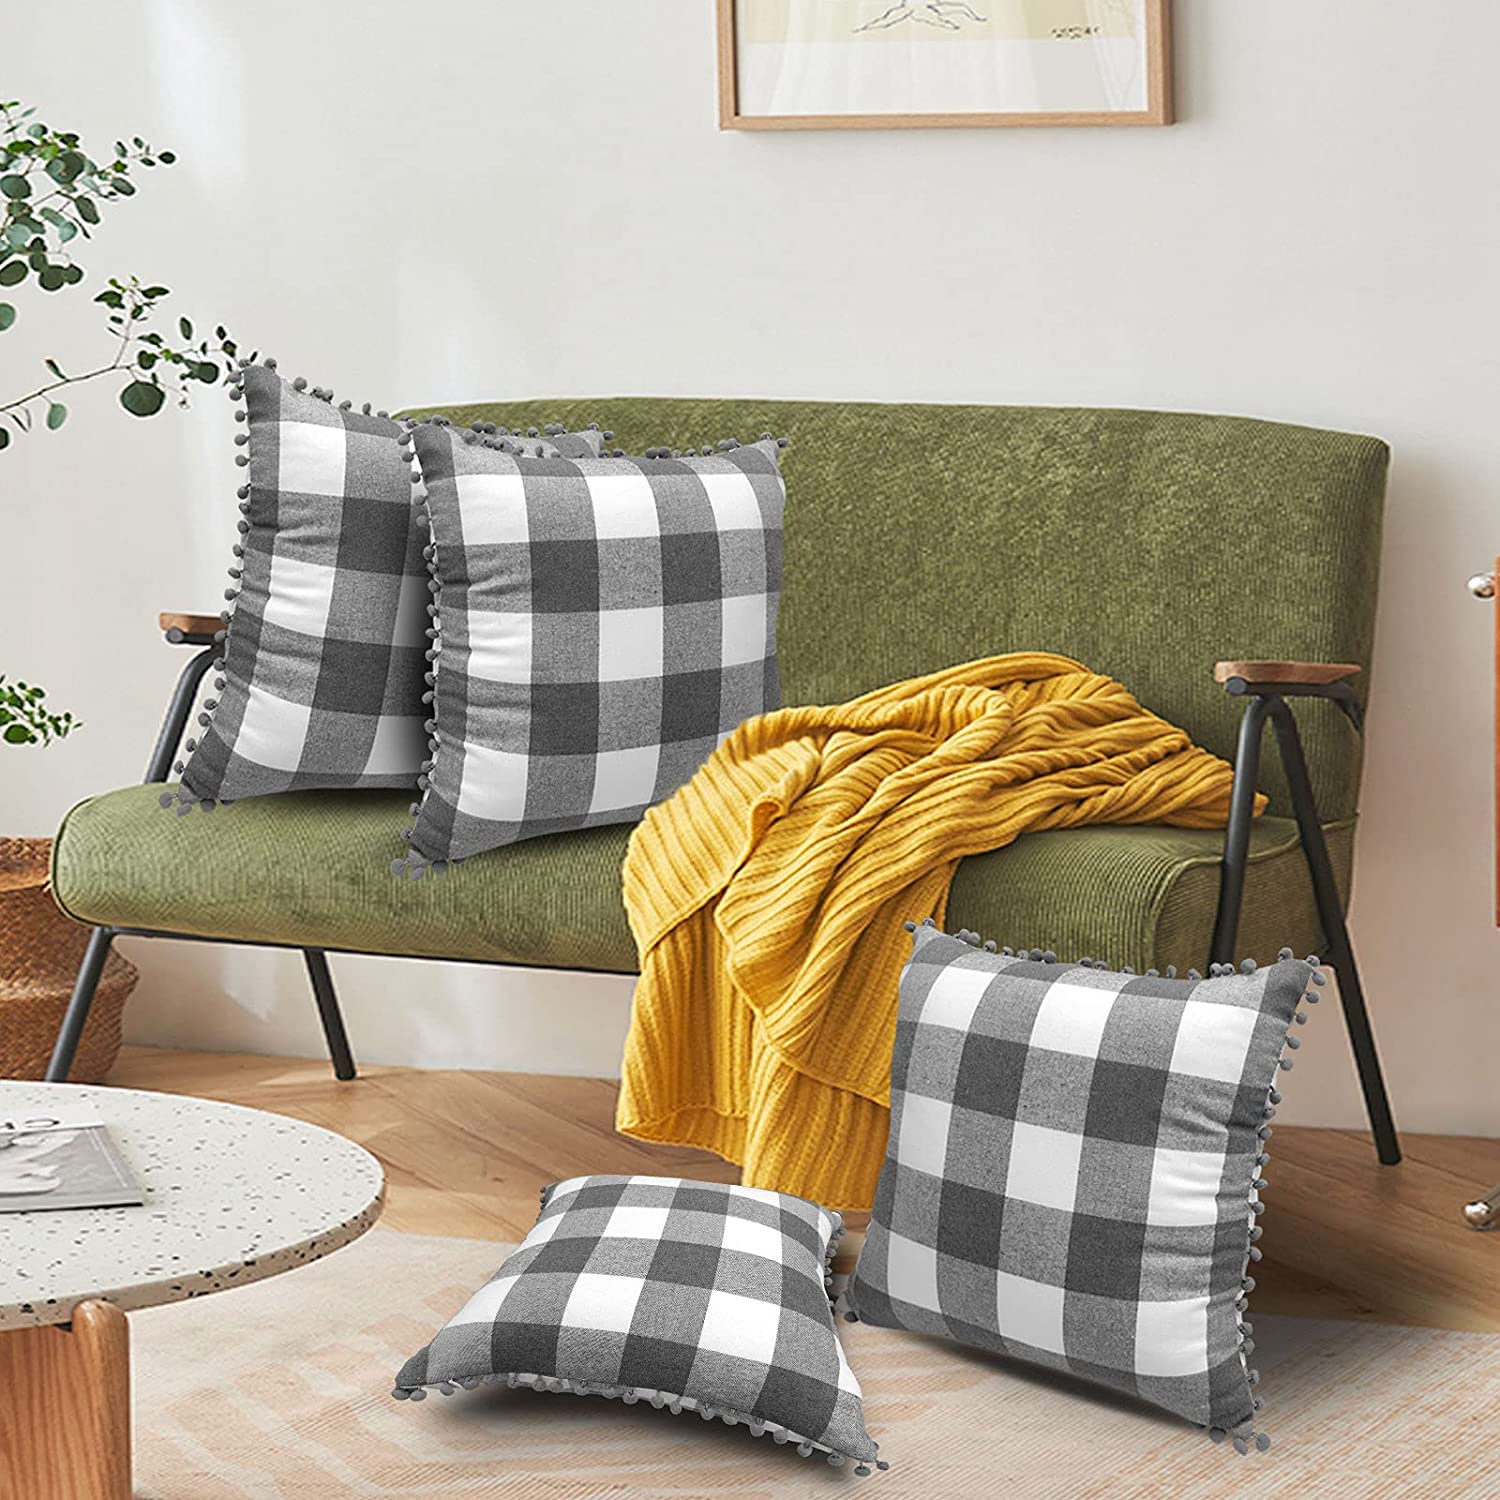 Set of 2 Soft Farmhouse Buffalo Check Pillow Covers 18 x 18 with 2 Bonus Coasters (Grey & White)